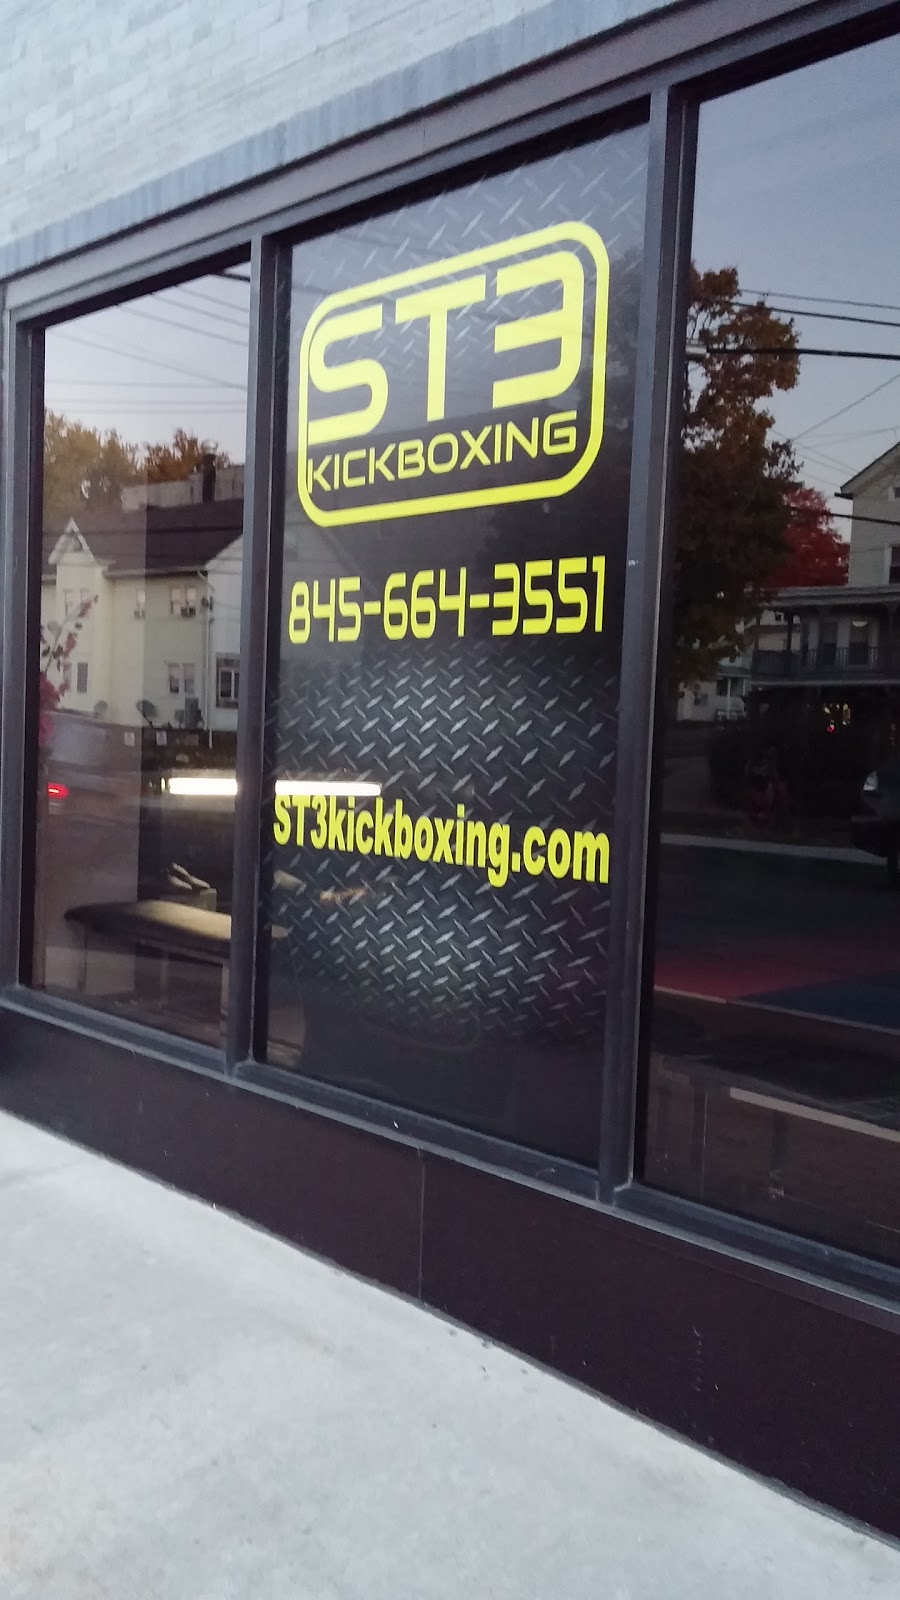 ST3 Kickboxing | 1019 NY-17M UNIT 2 UNIT 2, Monroe, NY 10950 | Phone: (845) 664-3551